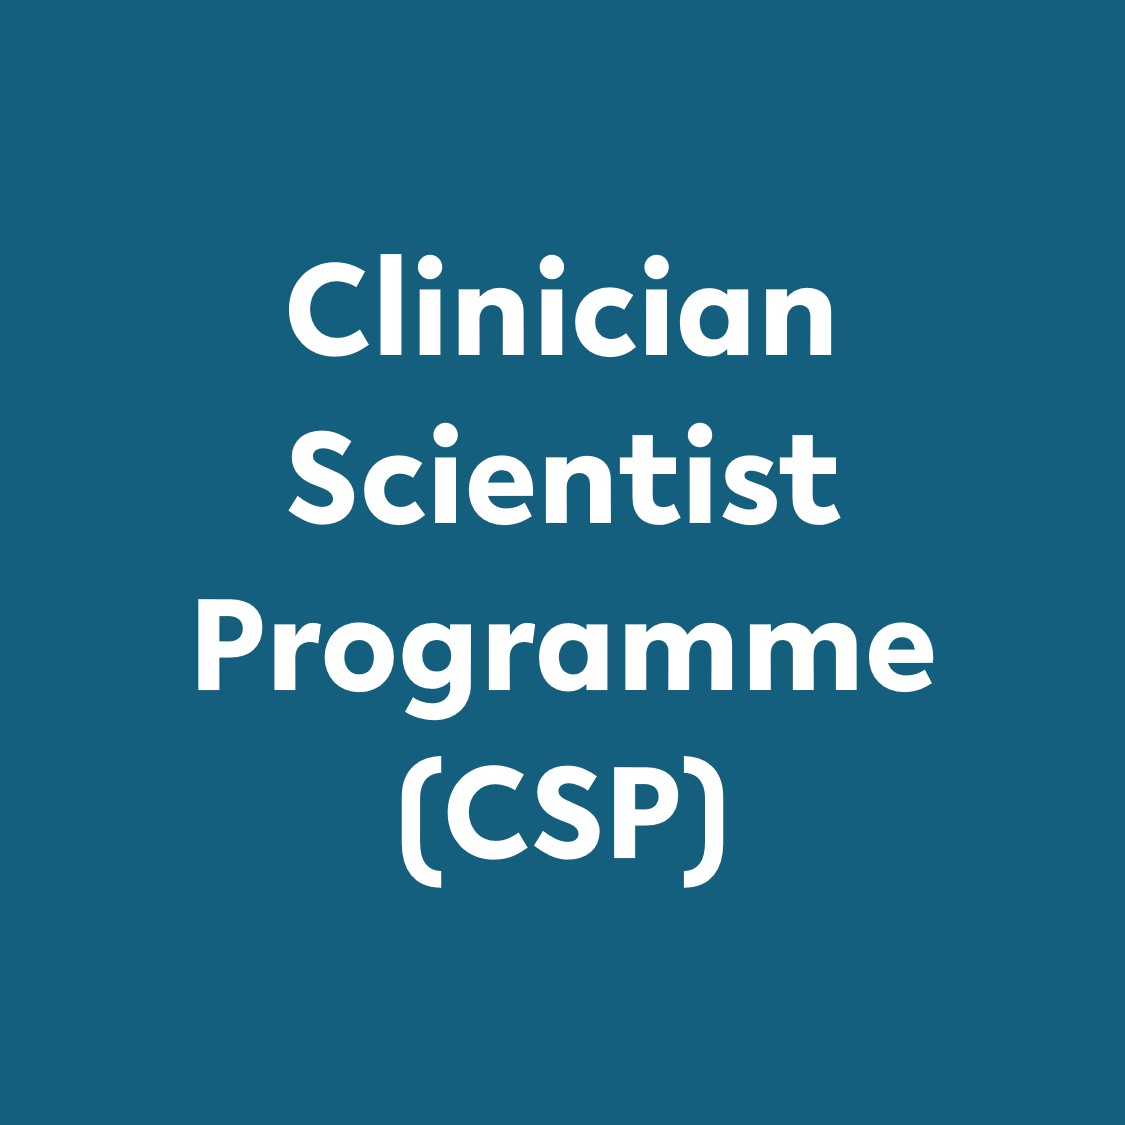 Clinician Scientist Programme (CSP)